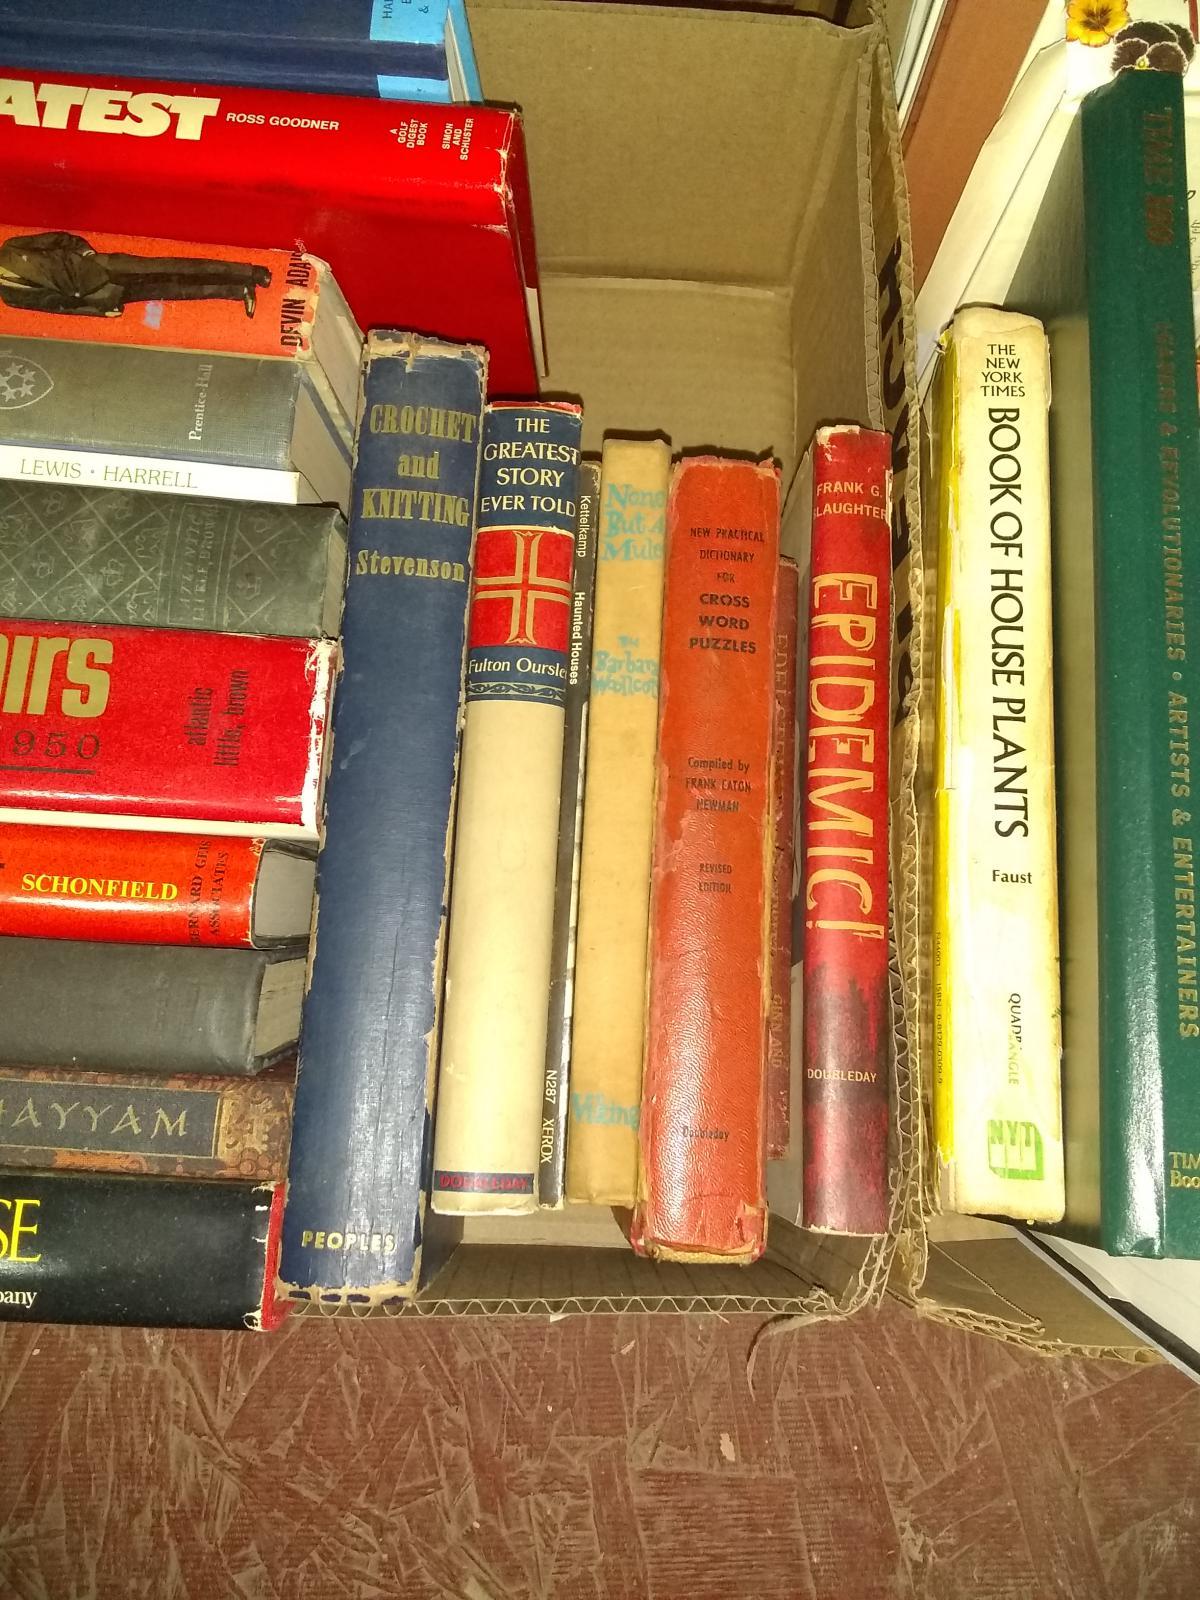 BL- Assorted Books